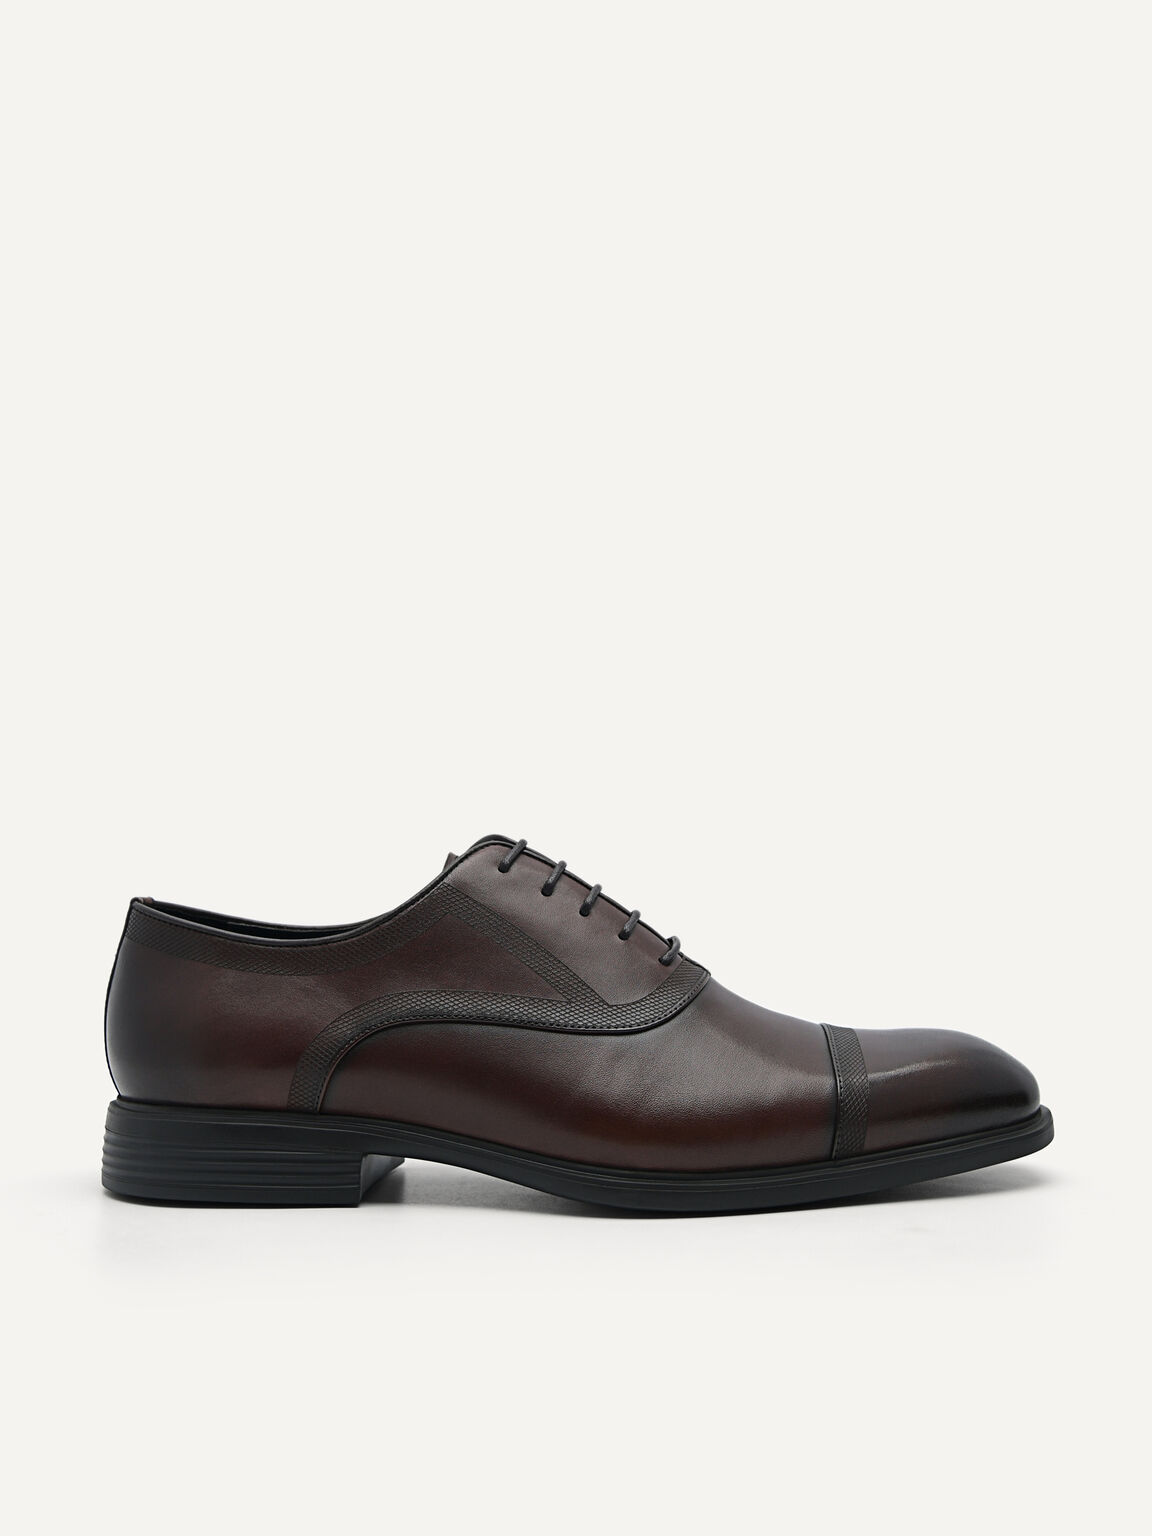 Altitude Thomas Lightweight Oxford Shoes, Dark Brown